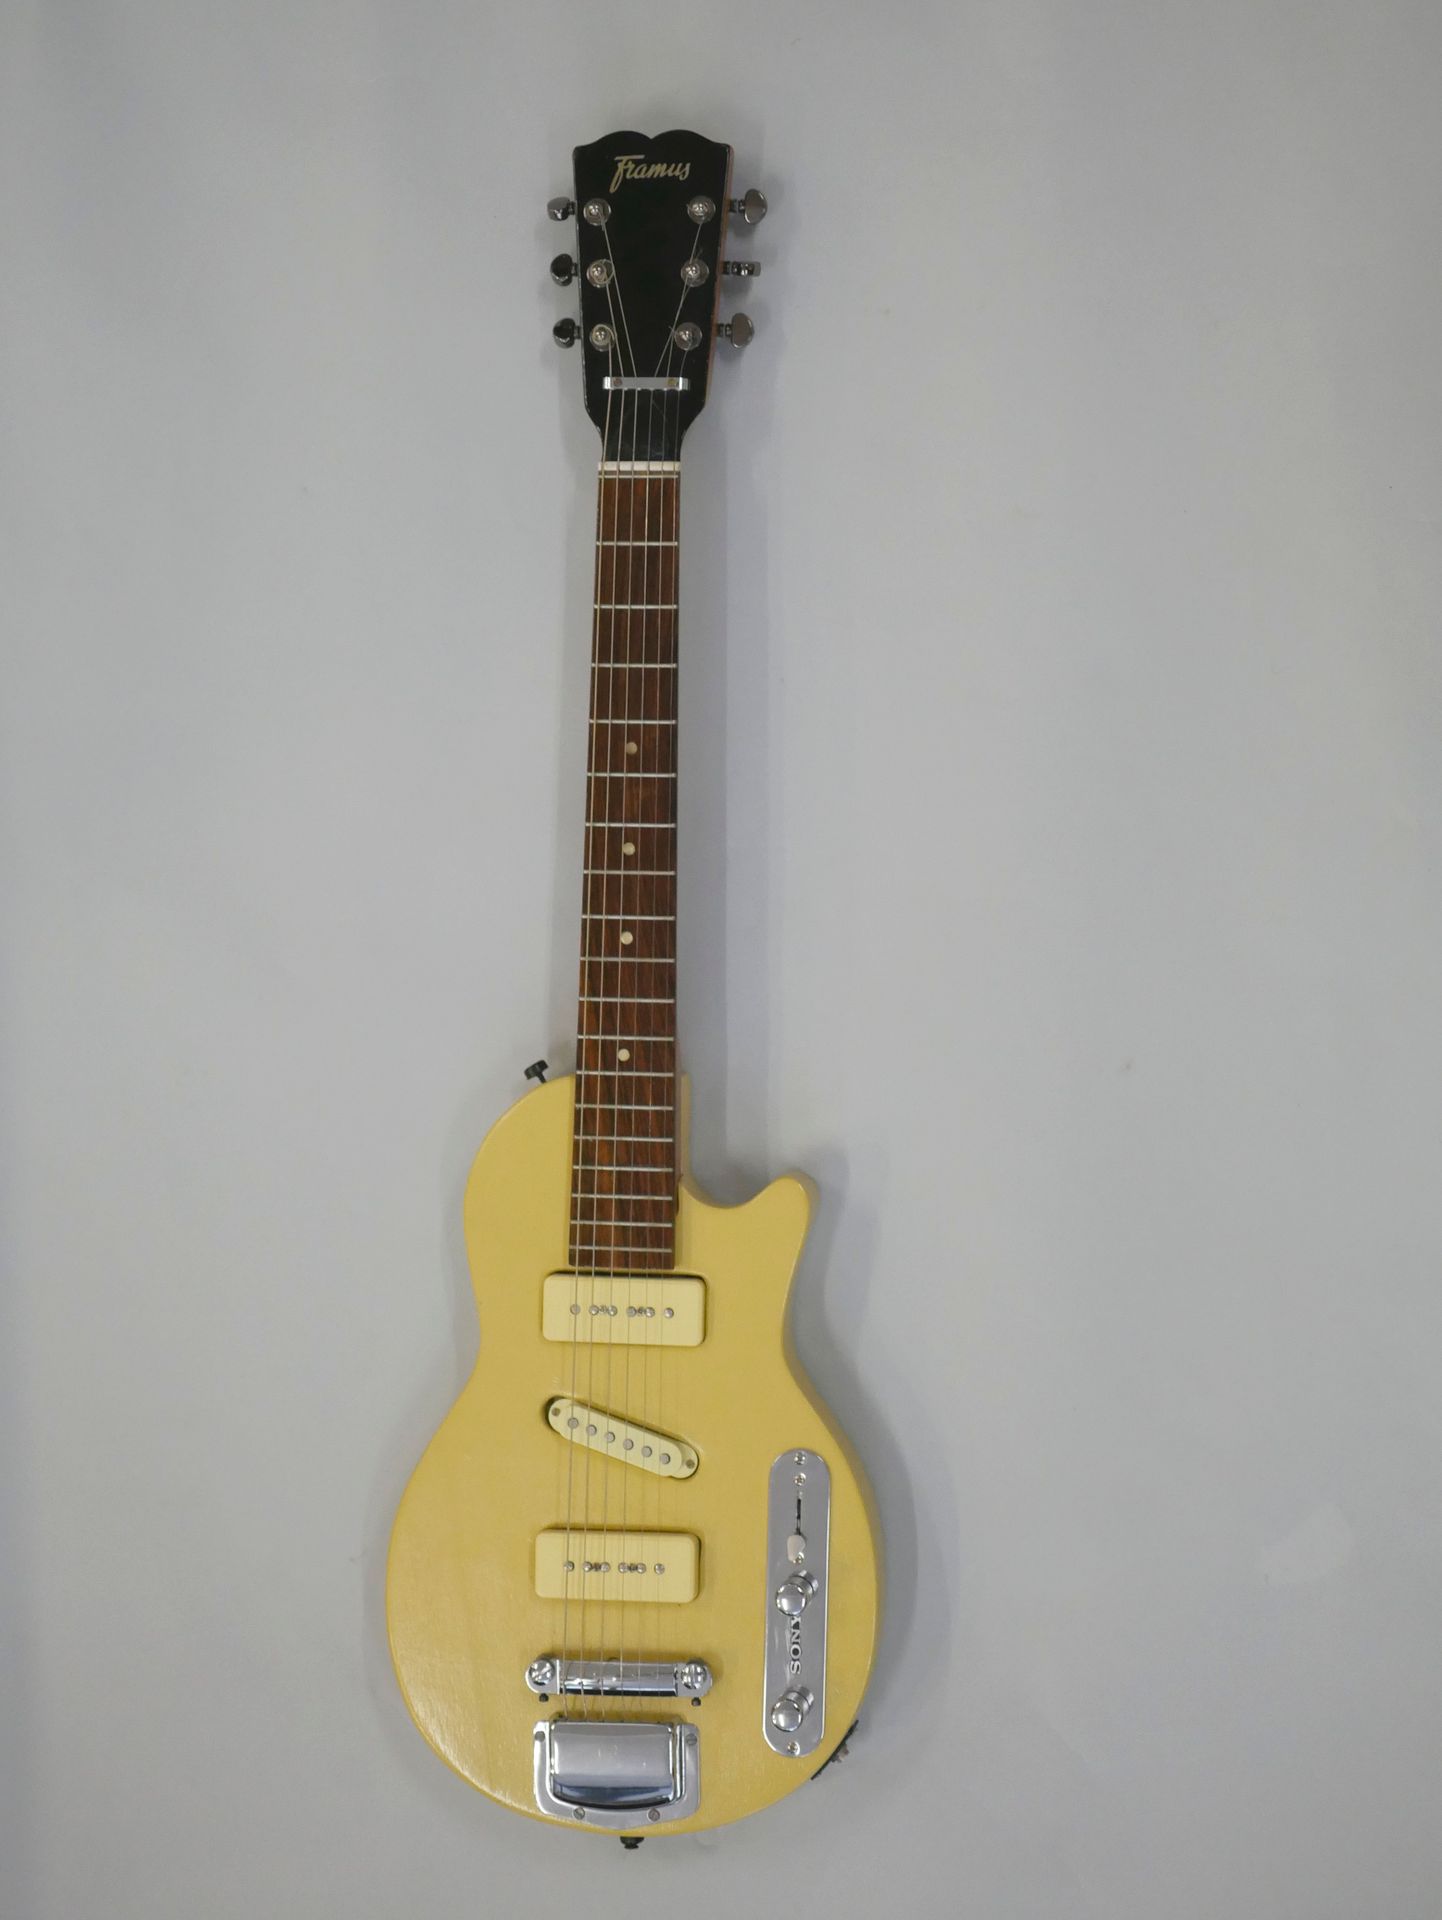 Null 实体电吉他，由Framus琴颈制成。

按原样出售。